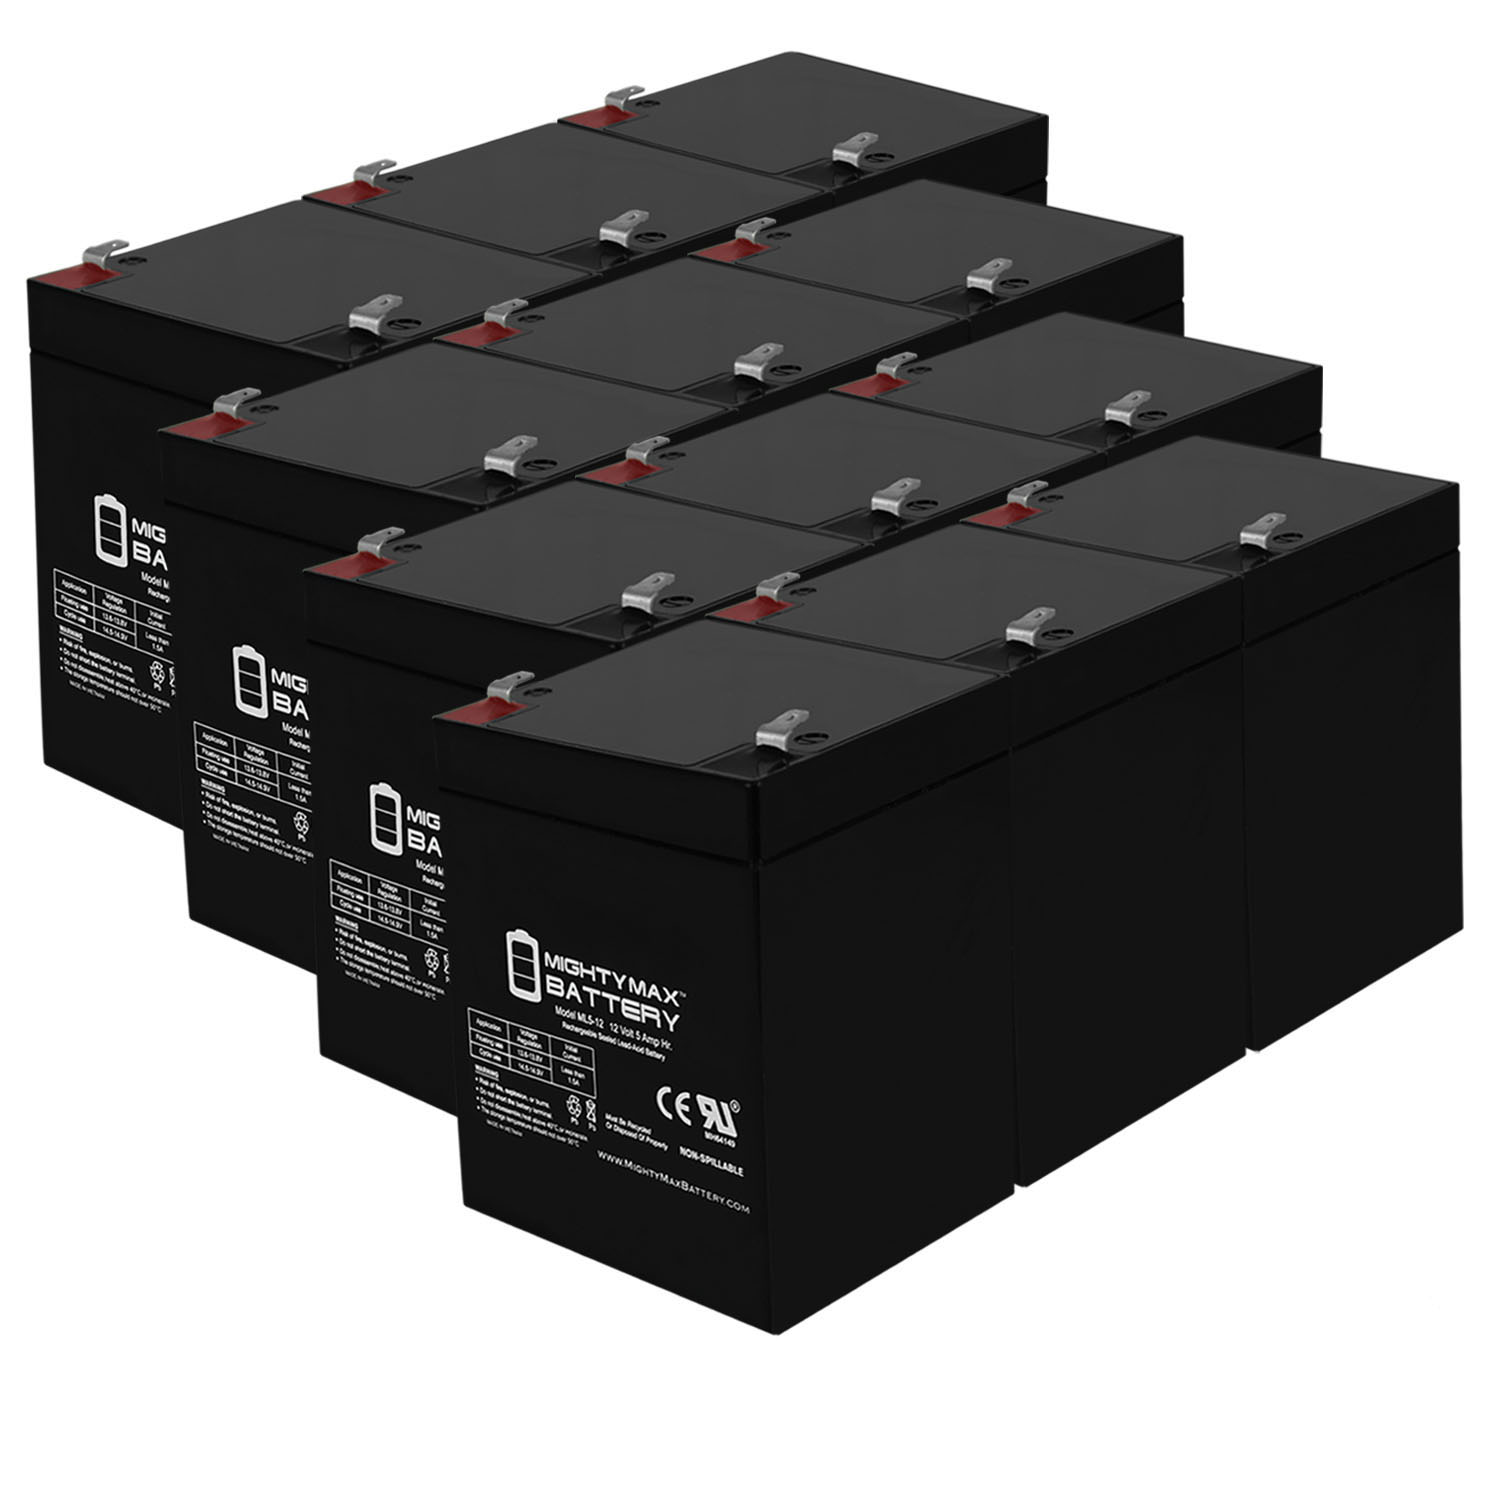 ML5-12 - 12V 5AH UPS Replacement Battery for Razor Pocket Bike X1 X2 49cc - 12 Pack